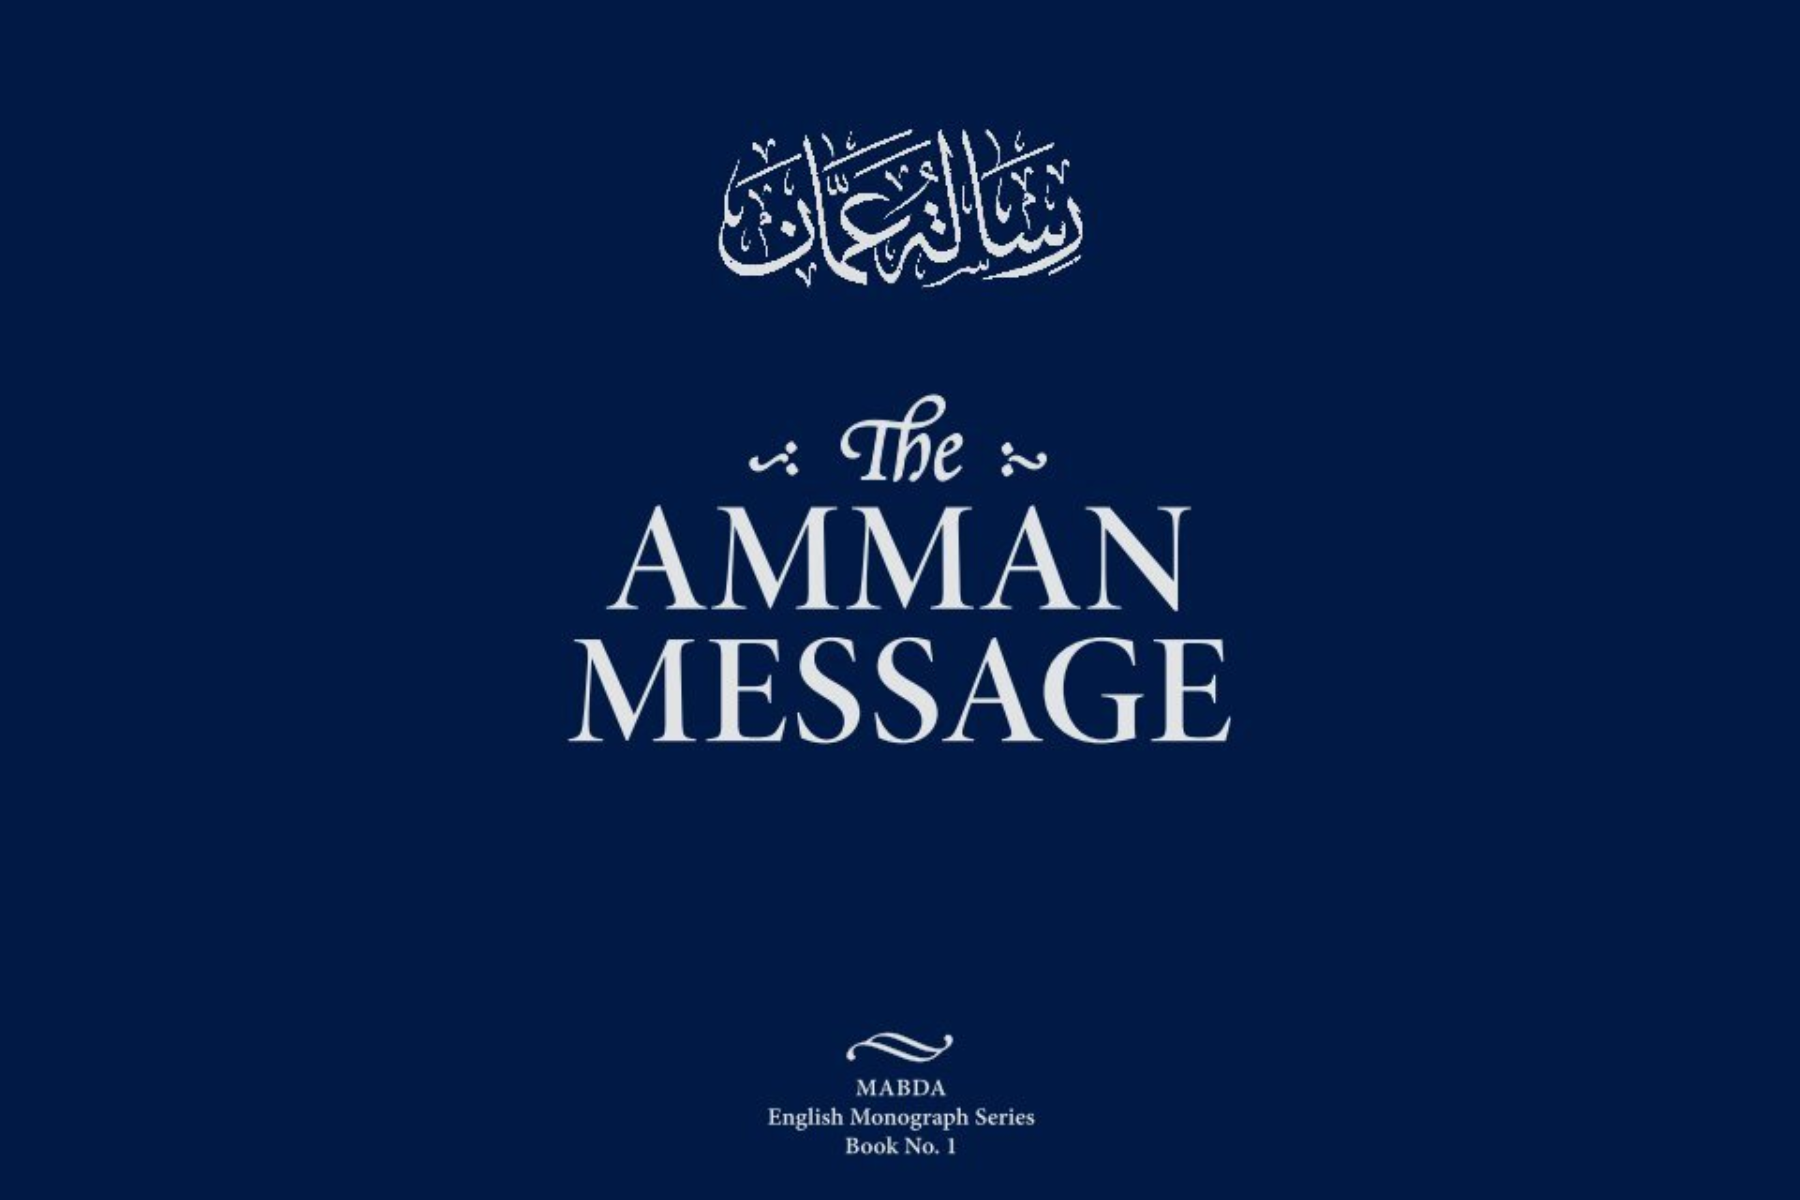 Mufti Desai Darul Uloom Abu Bakr South Africa Voicing Criticisms Amman Message